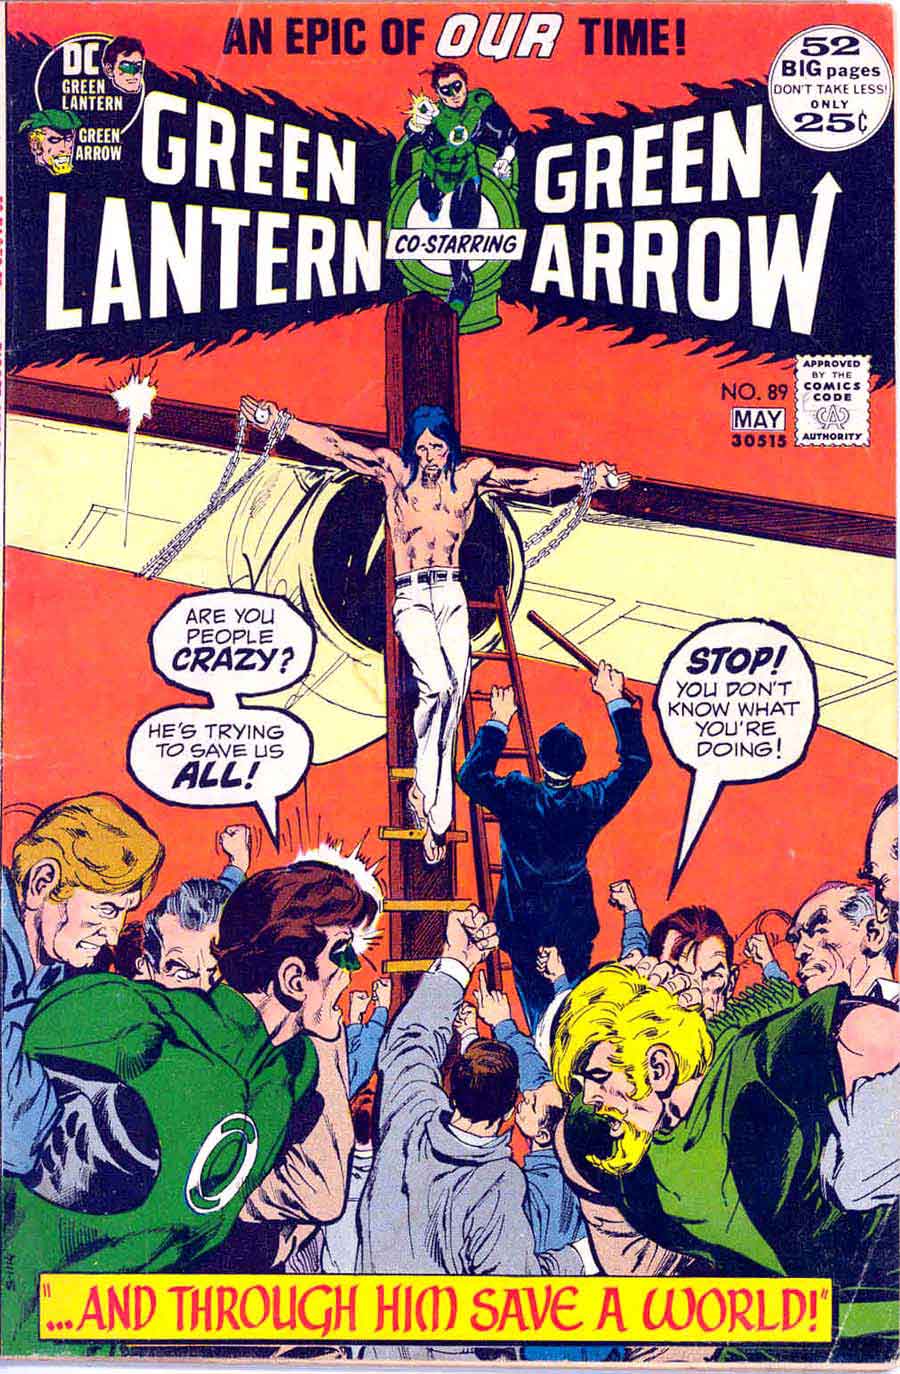 Green Lantern Green Arrow #89 bronze age 1970s dc comic book cover art by Neal Adams